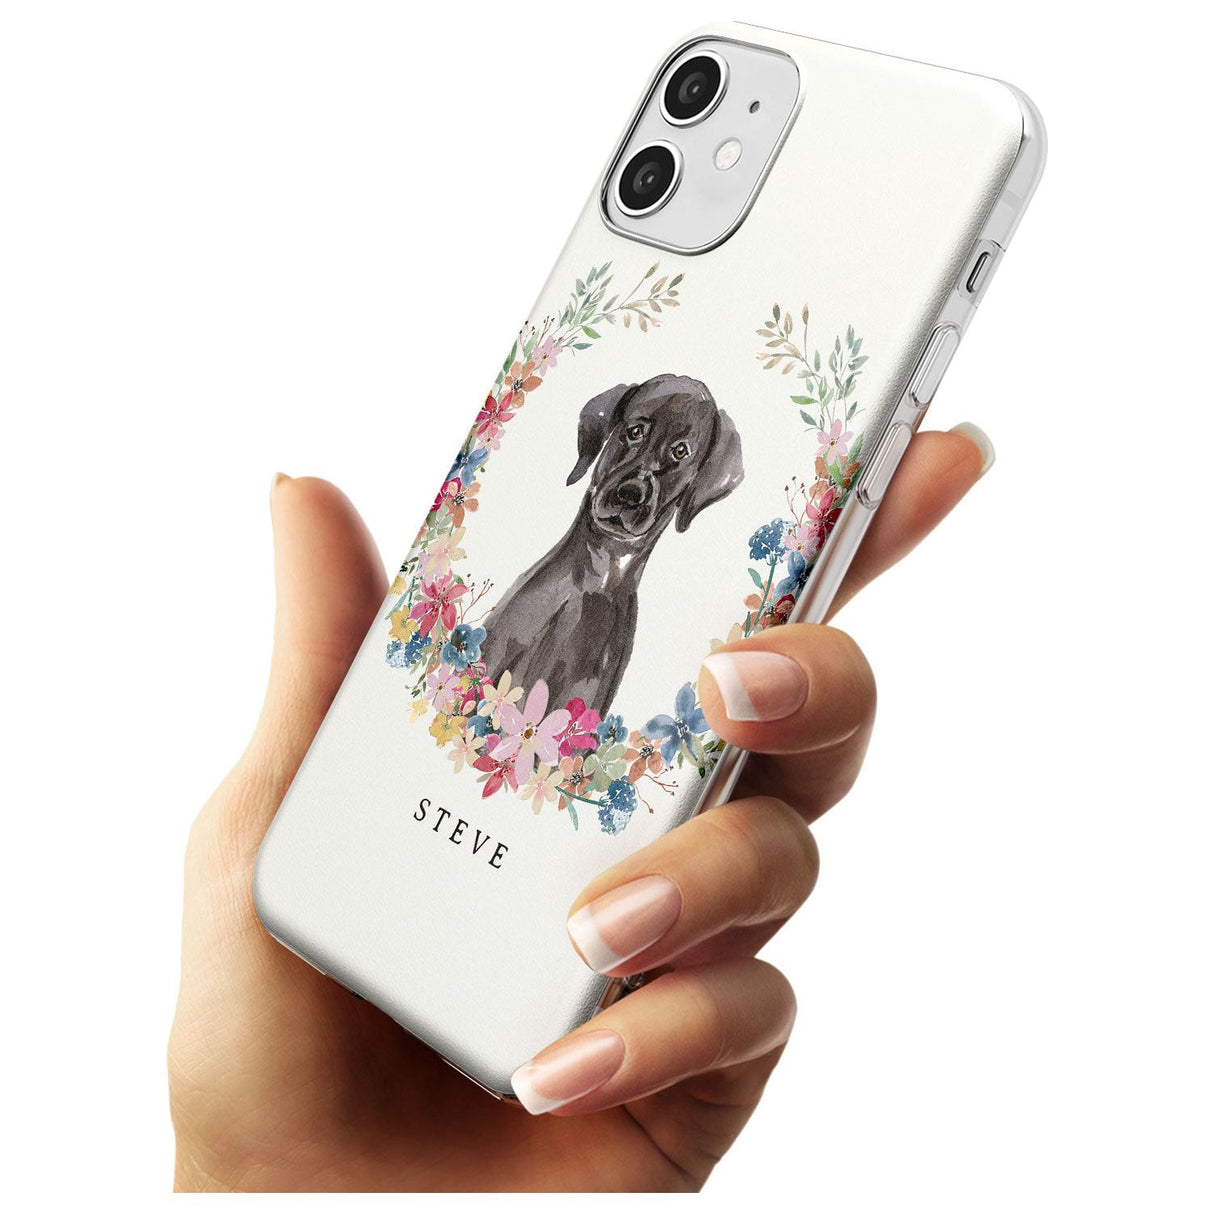 Black Lab Watercolour Dog Portrait Slim TPU Phone Case for iPhone 11